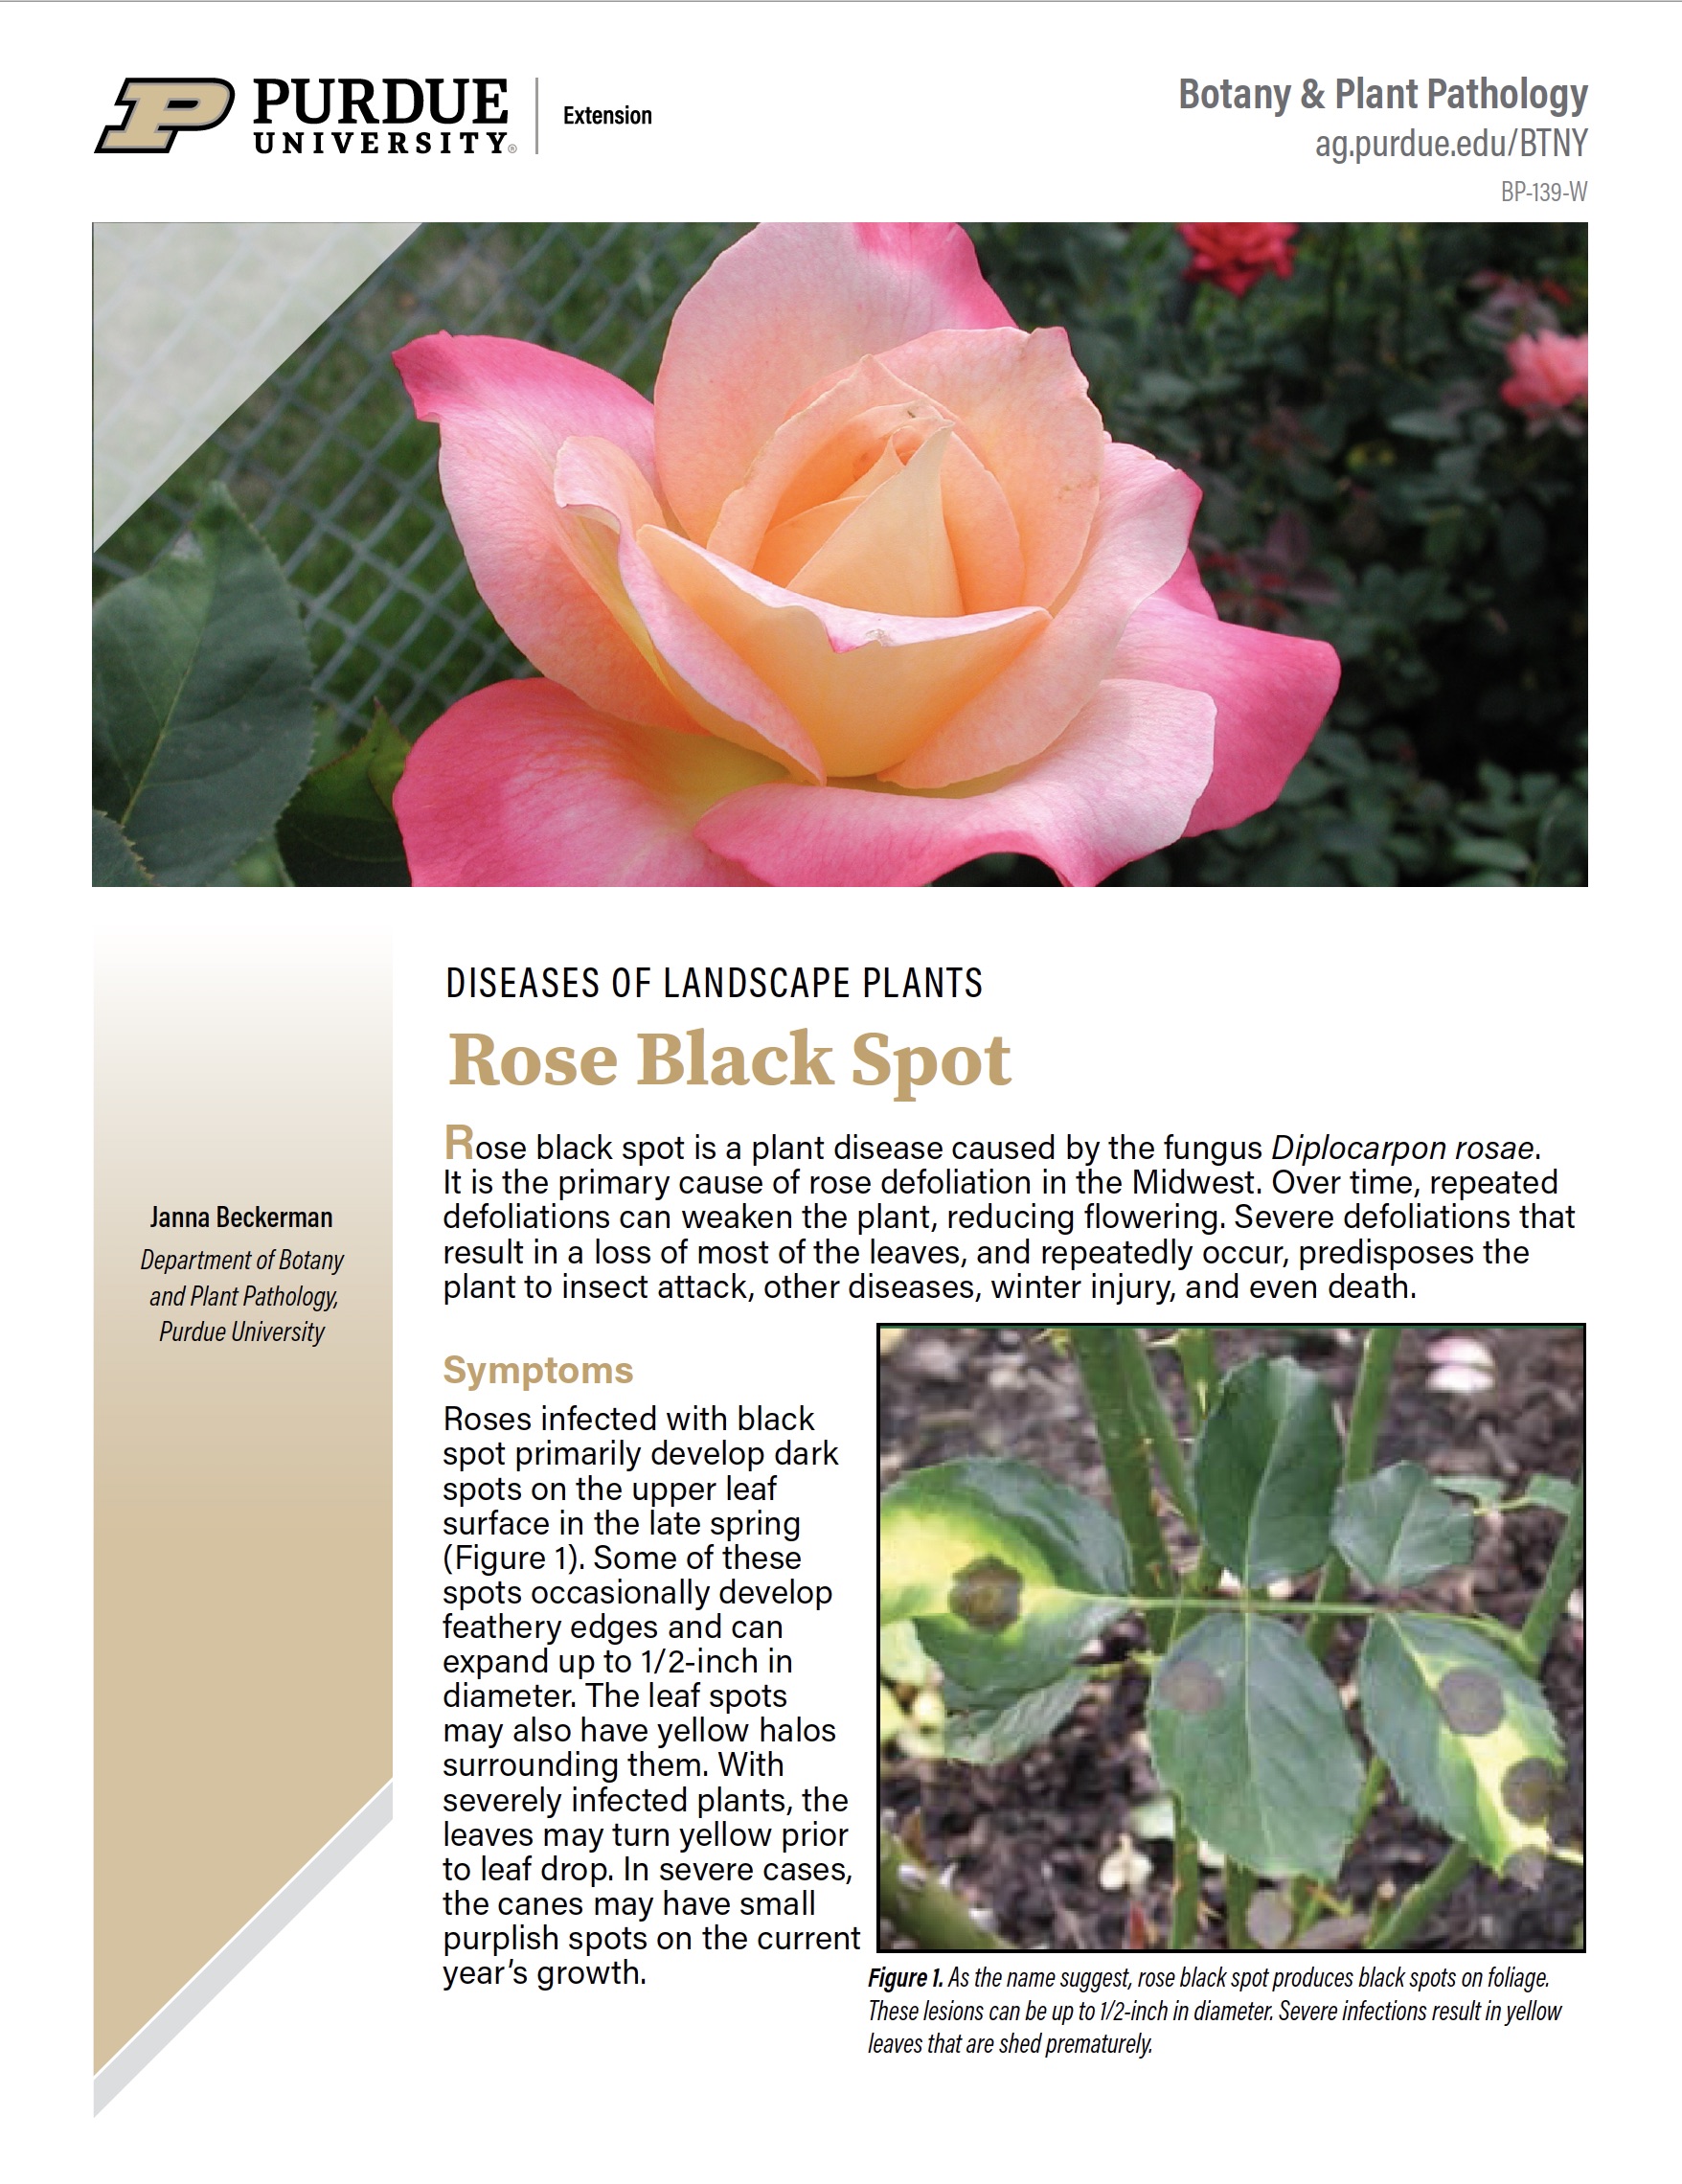 Diseases of Landscape Plants: Rose Black Spot